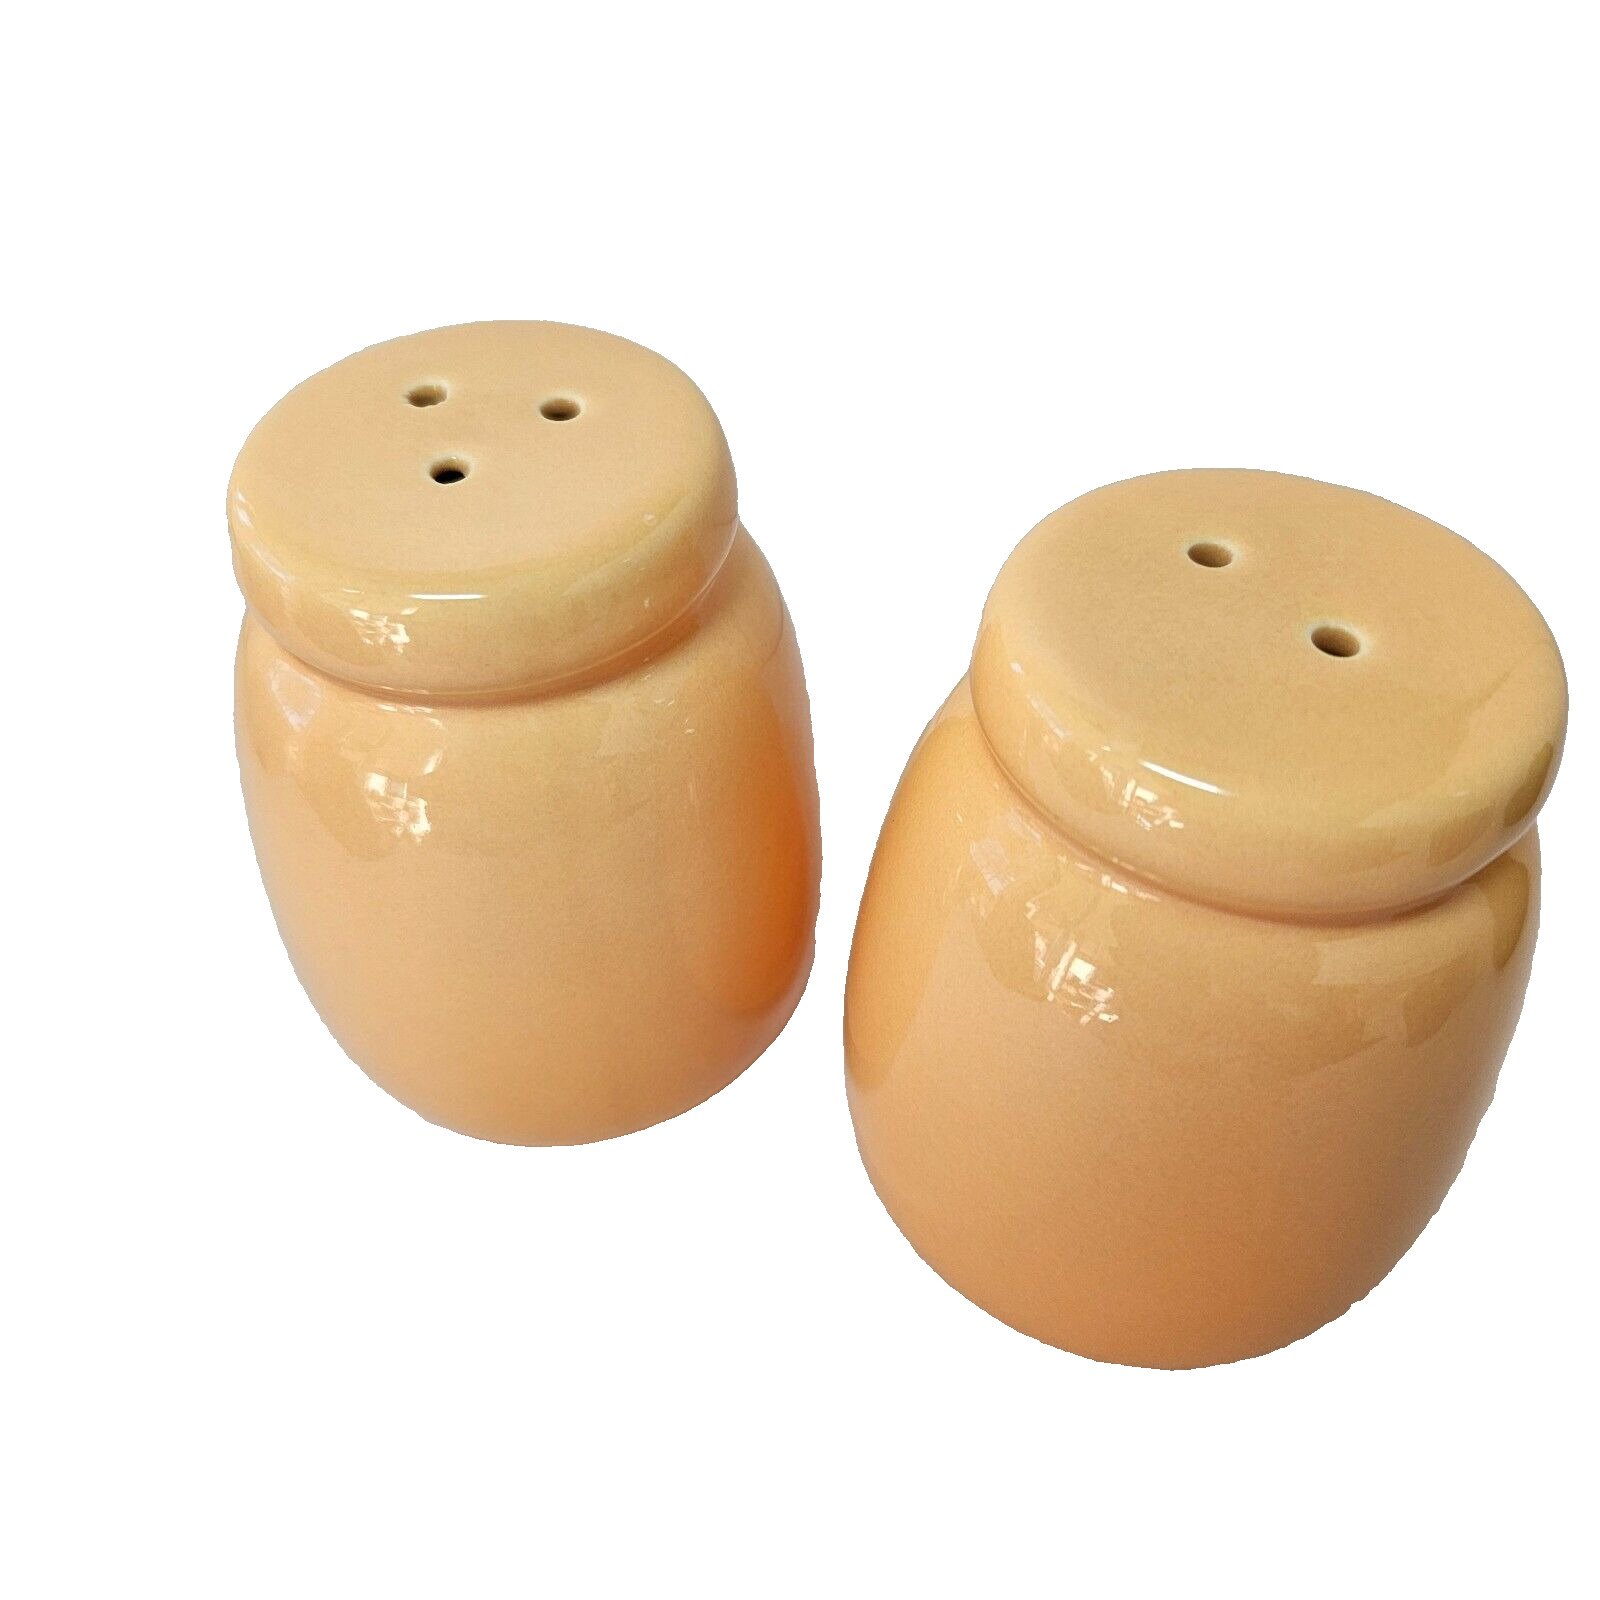 Mervyns Salt and Pepper Shakers MADE IN JAPAN Vintage Yellow Ceramic